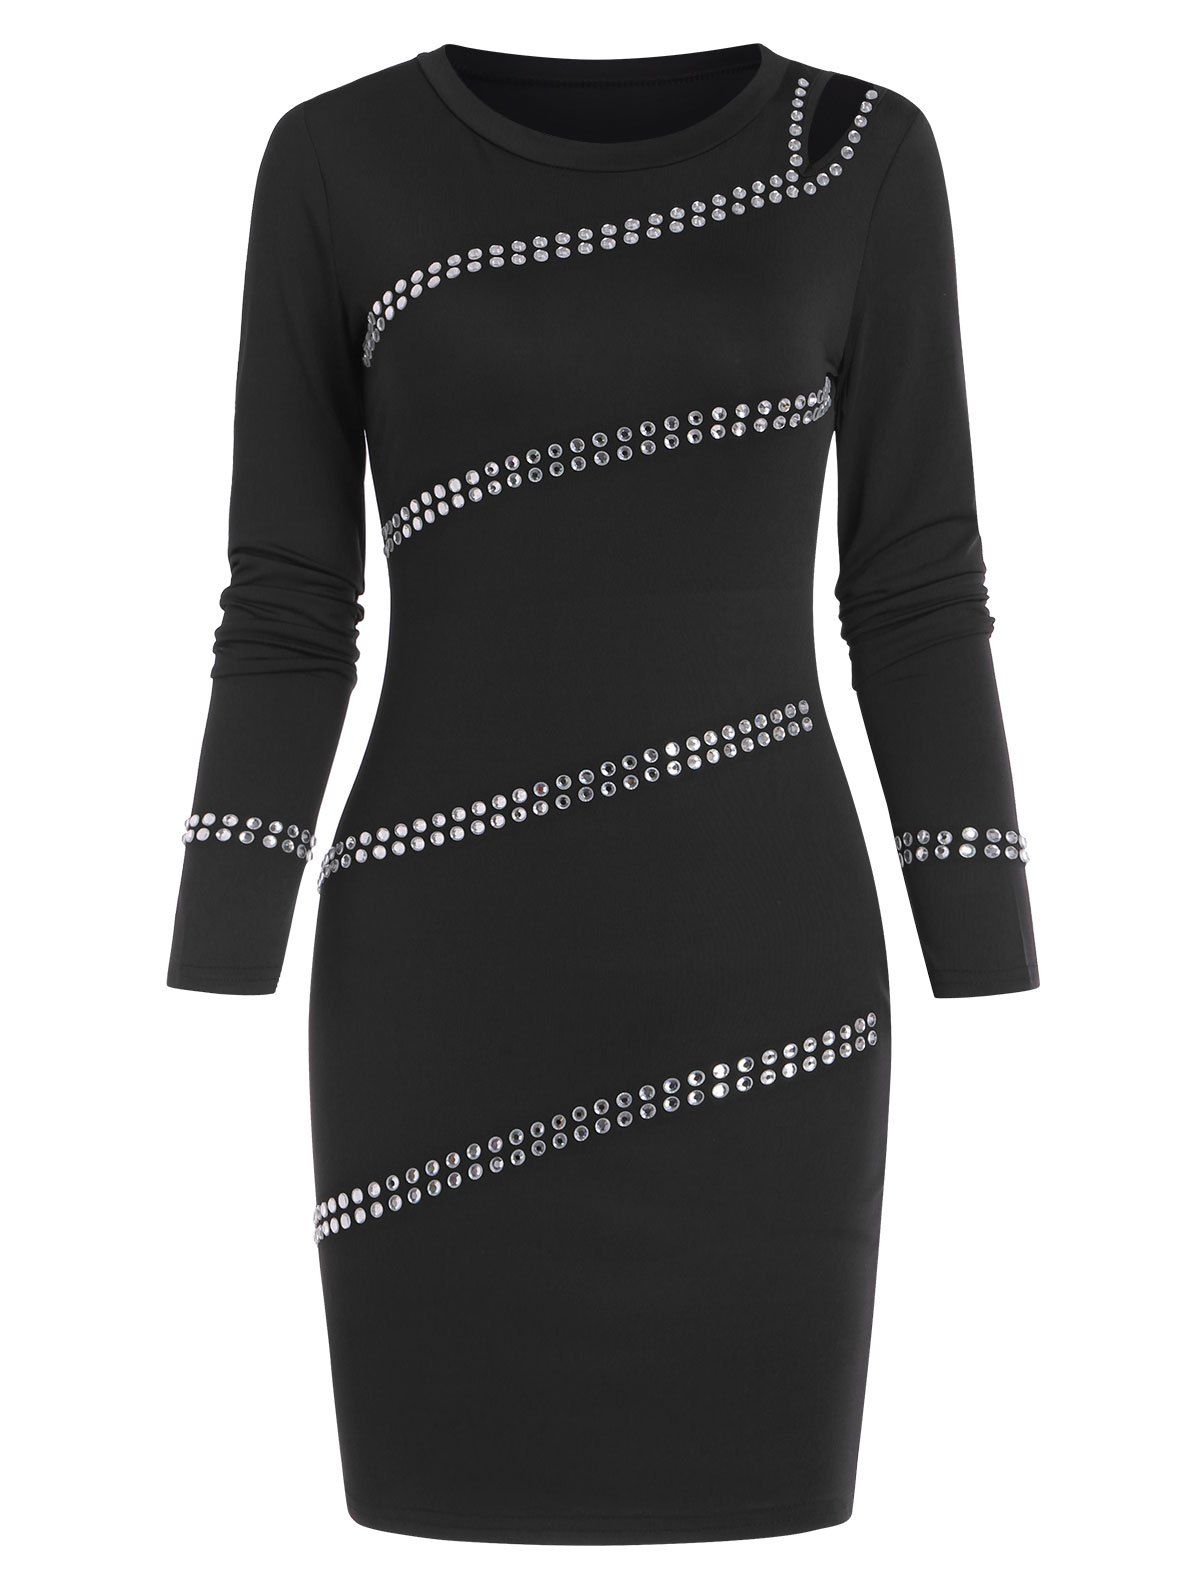 Rhinestone Embellished Cut Out Mini Slinky Dress - BLACK S